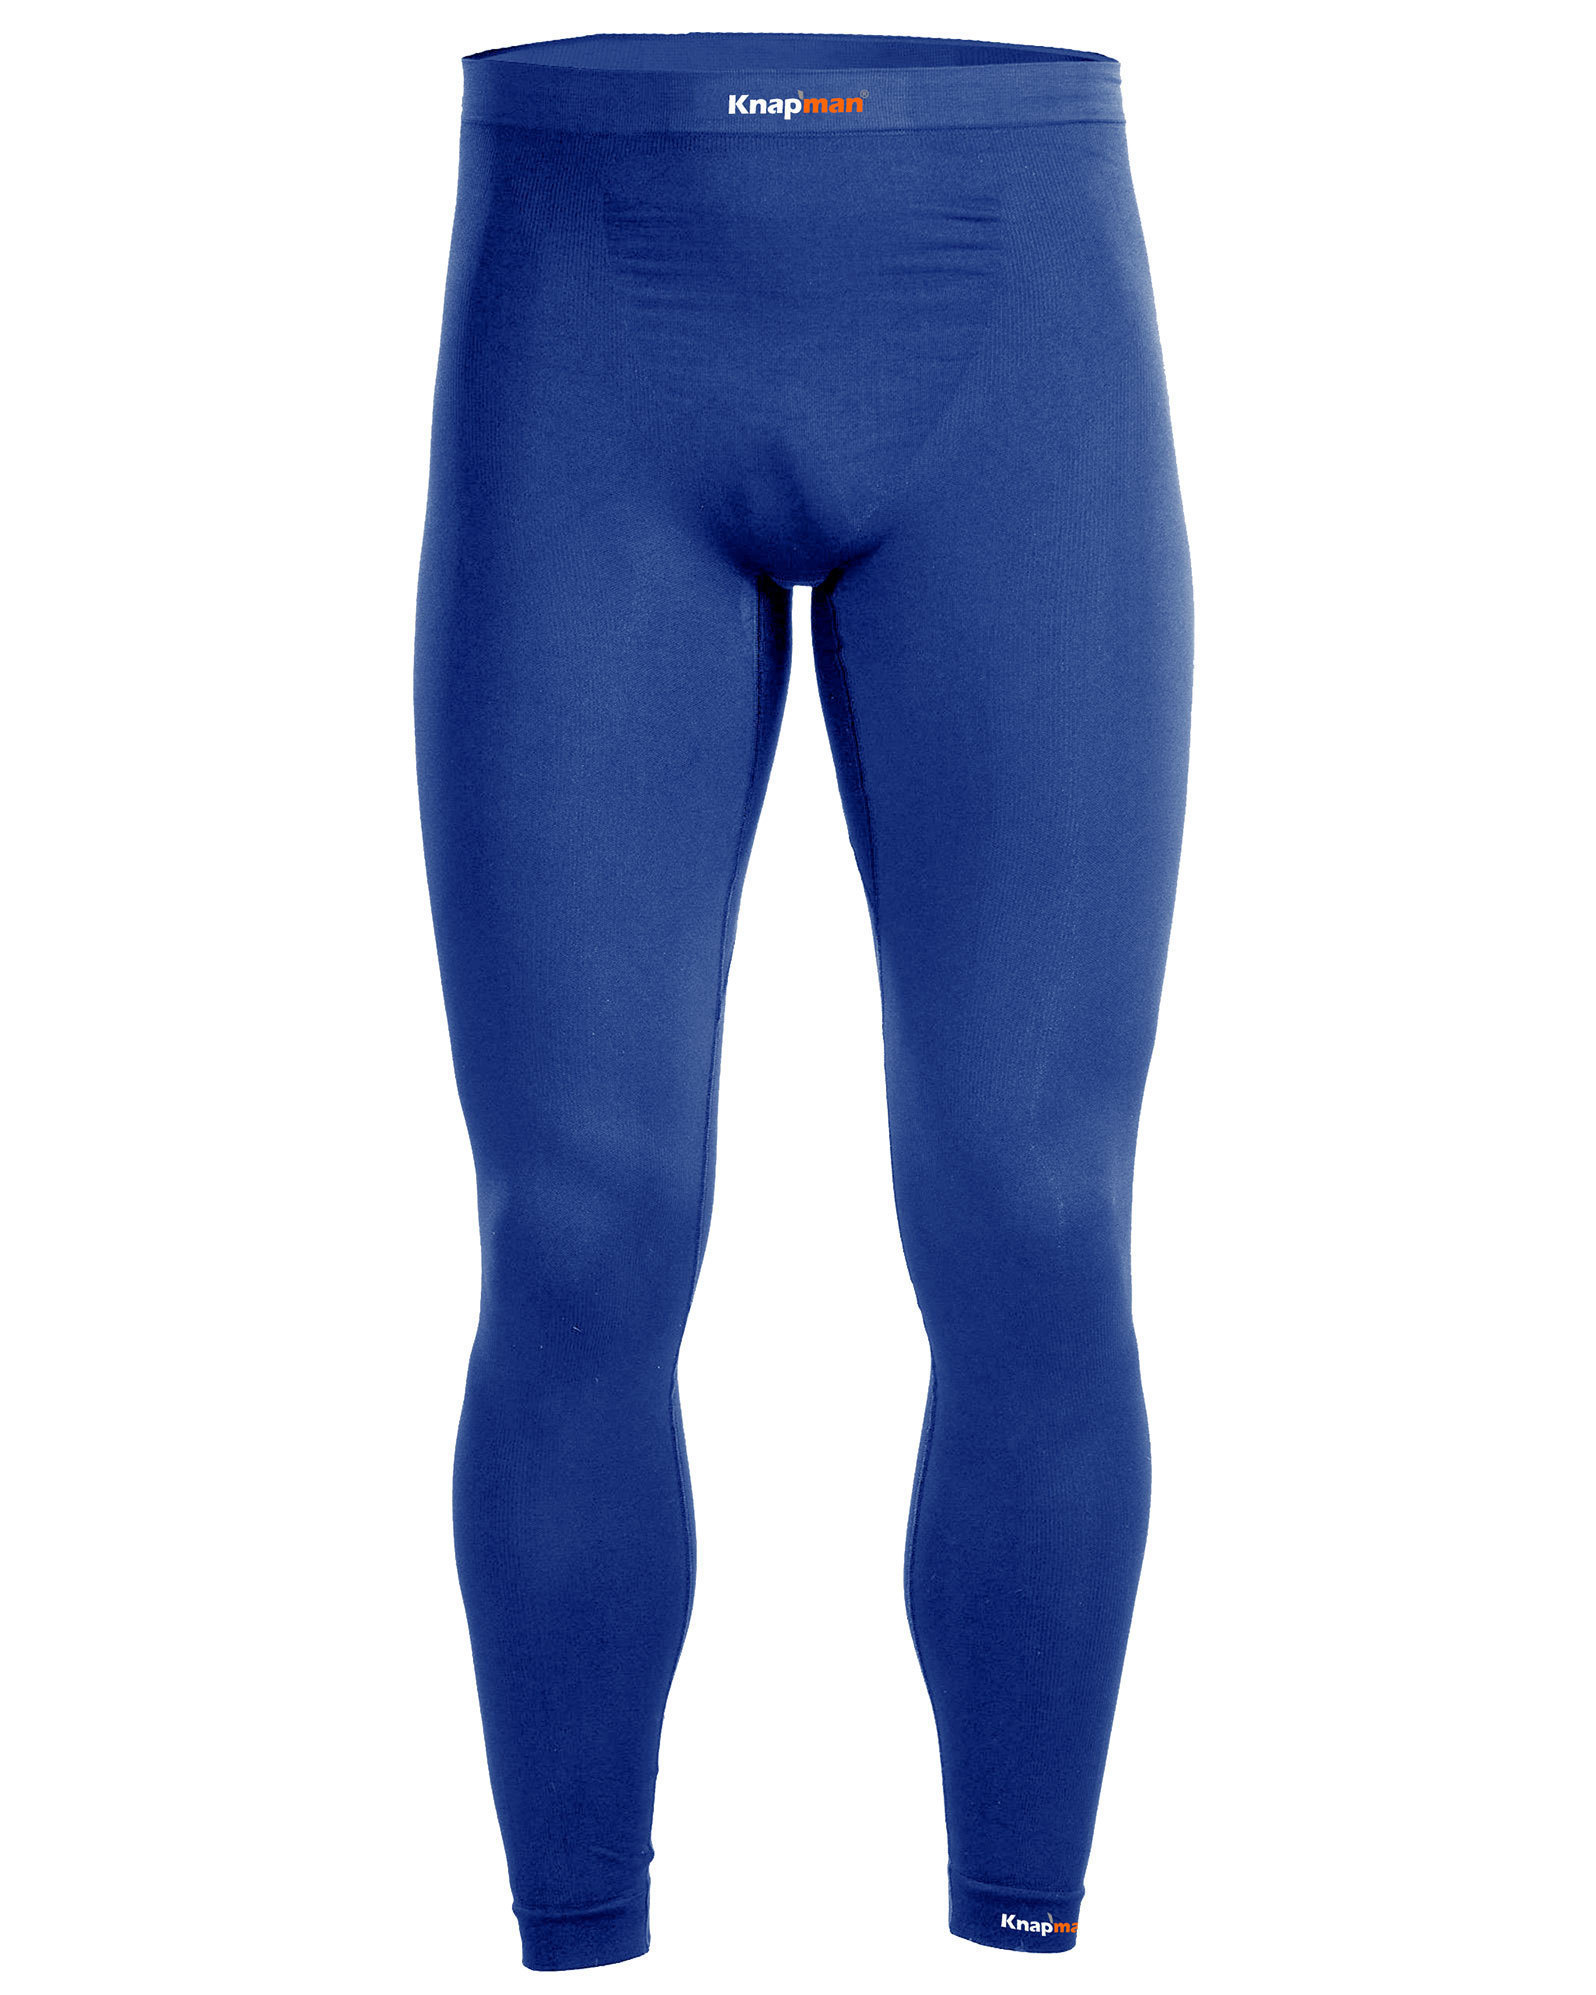 Knap'man Zoned Compression Pants Long 45% Royal Blue